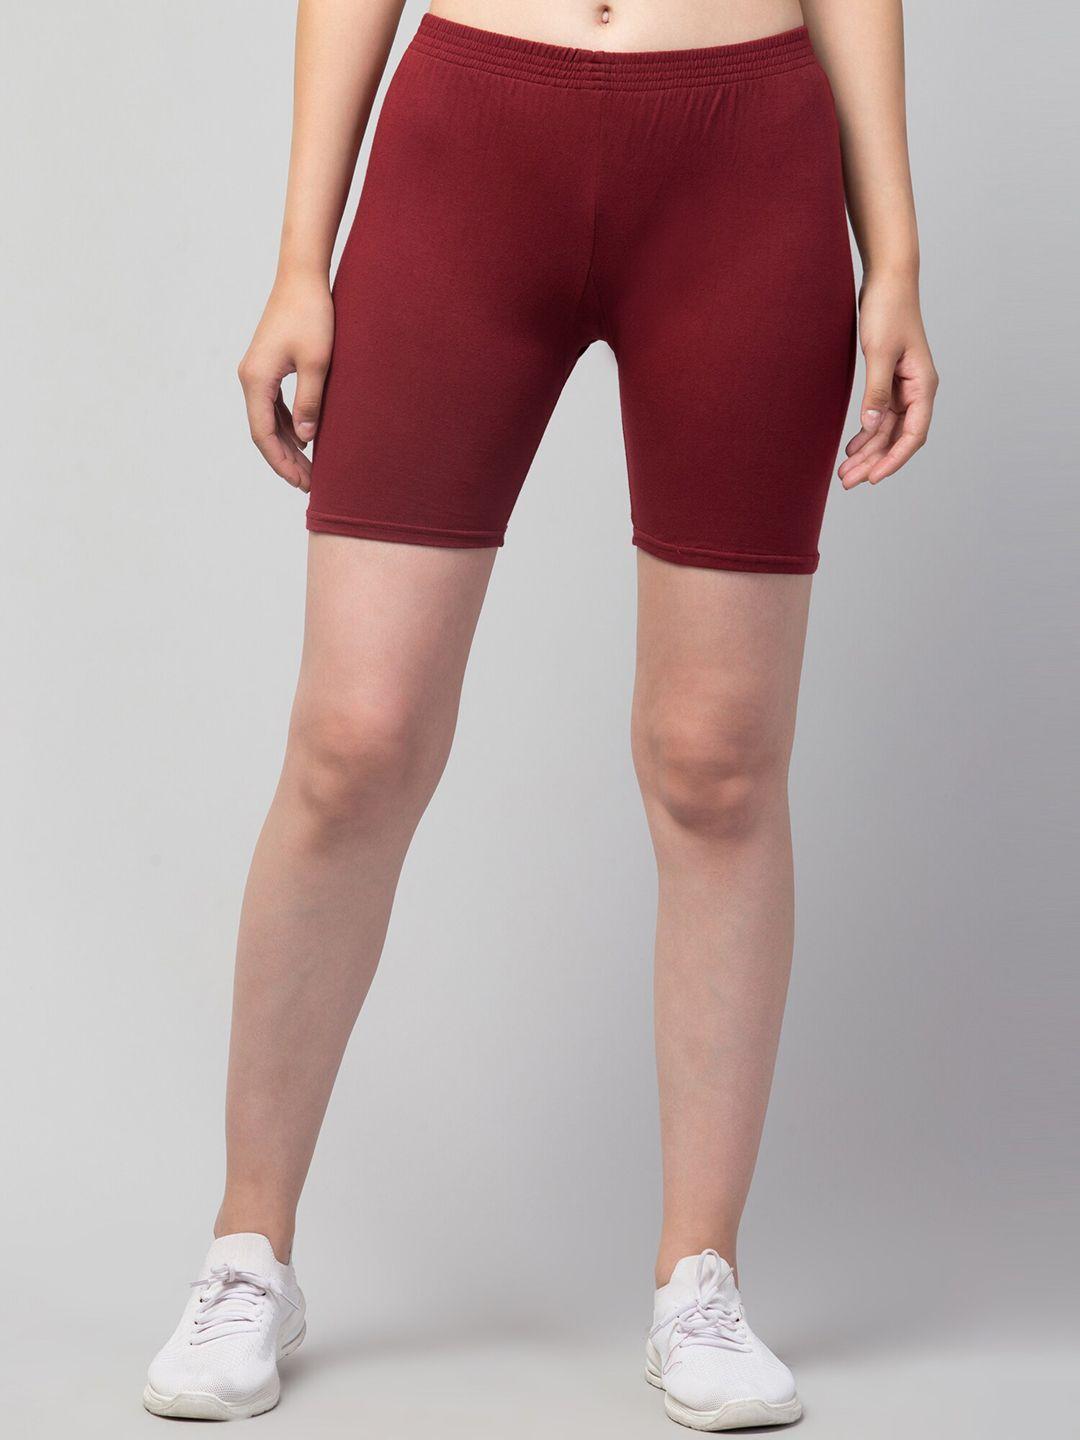 apraa & parma women maroon cycling sports shorts